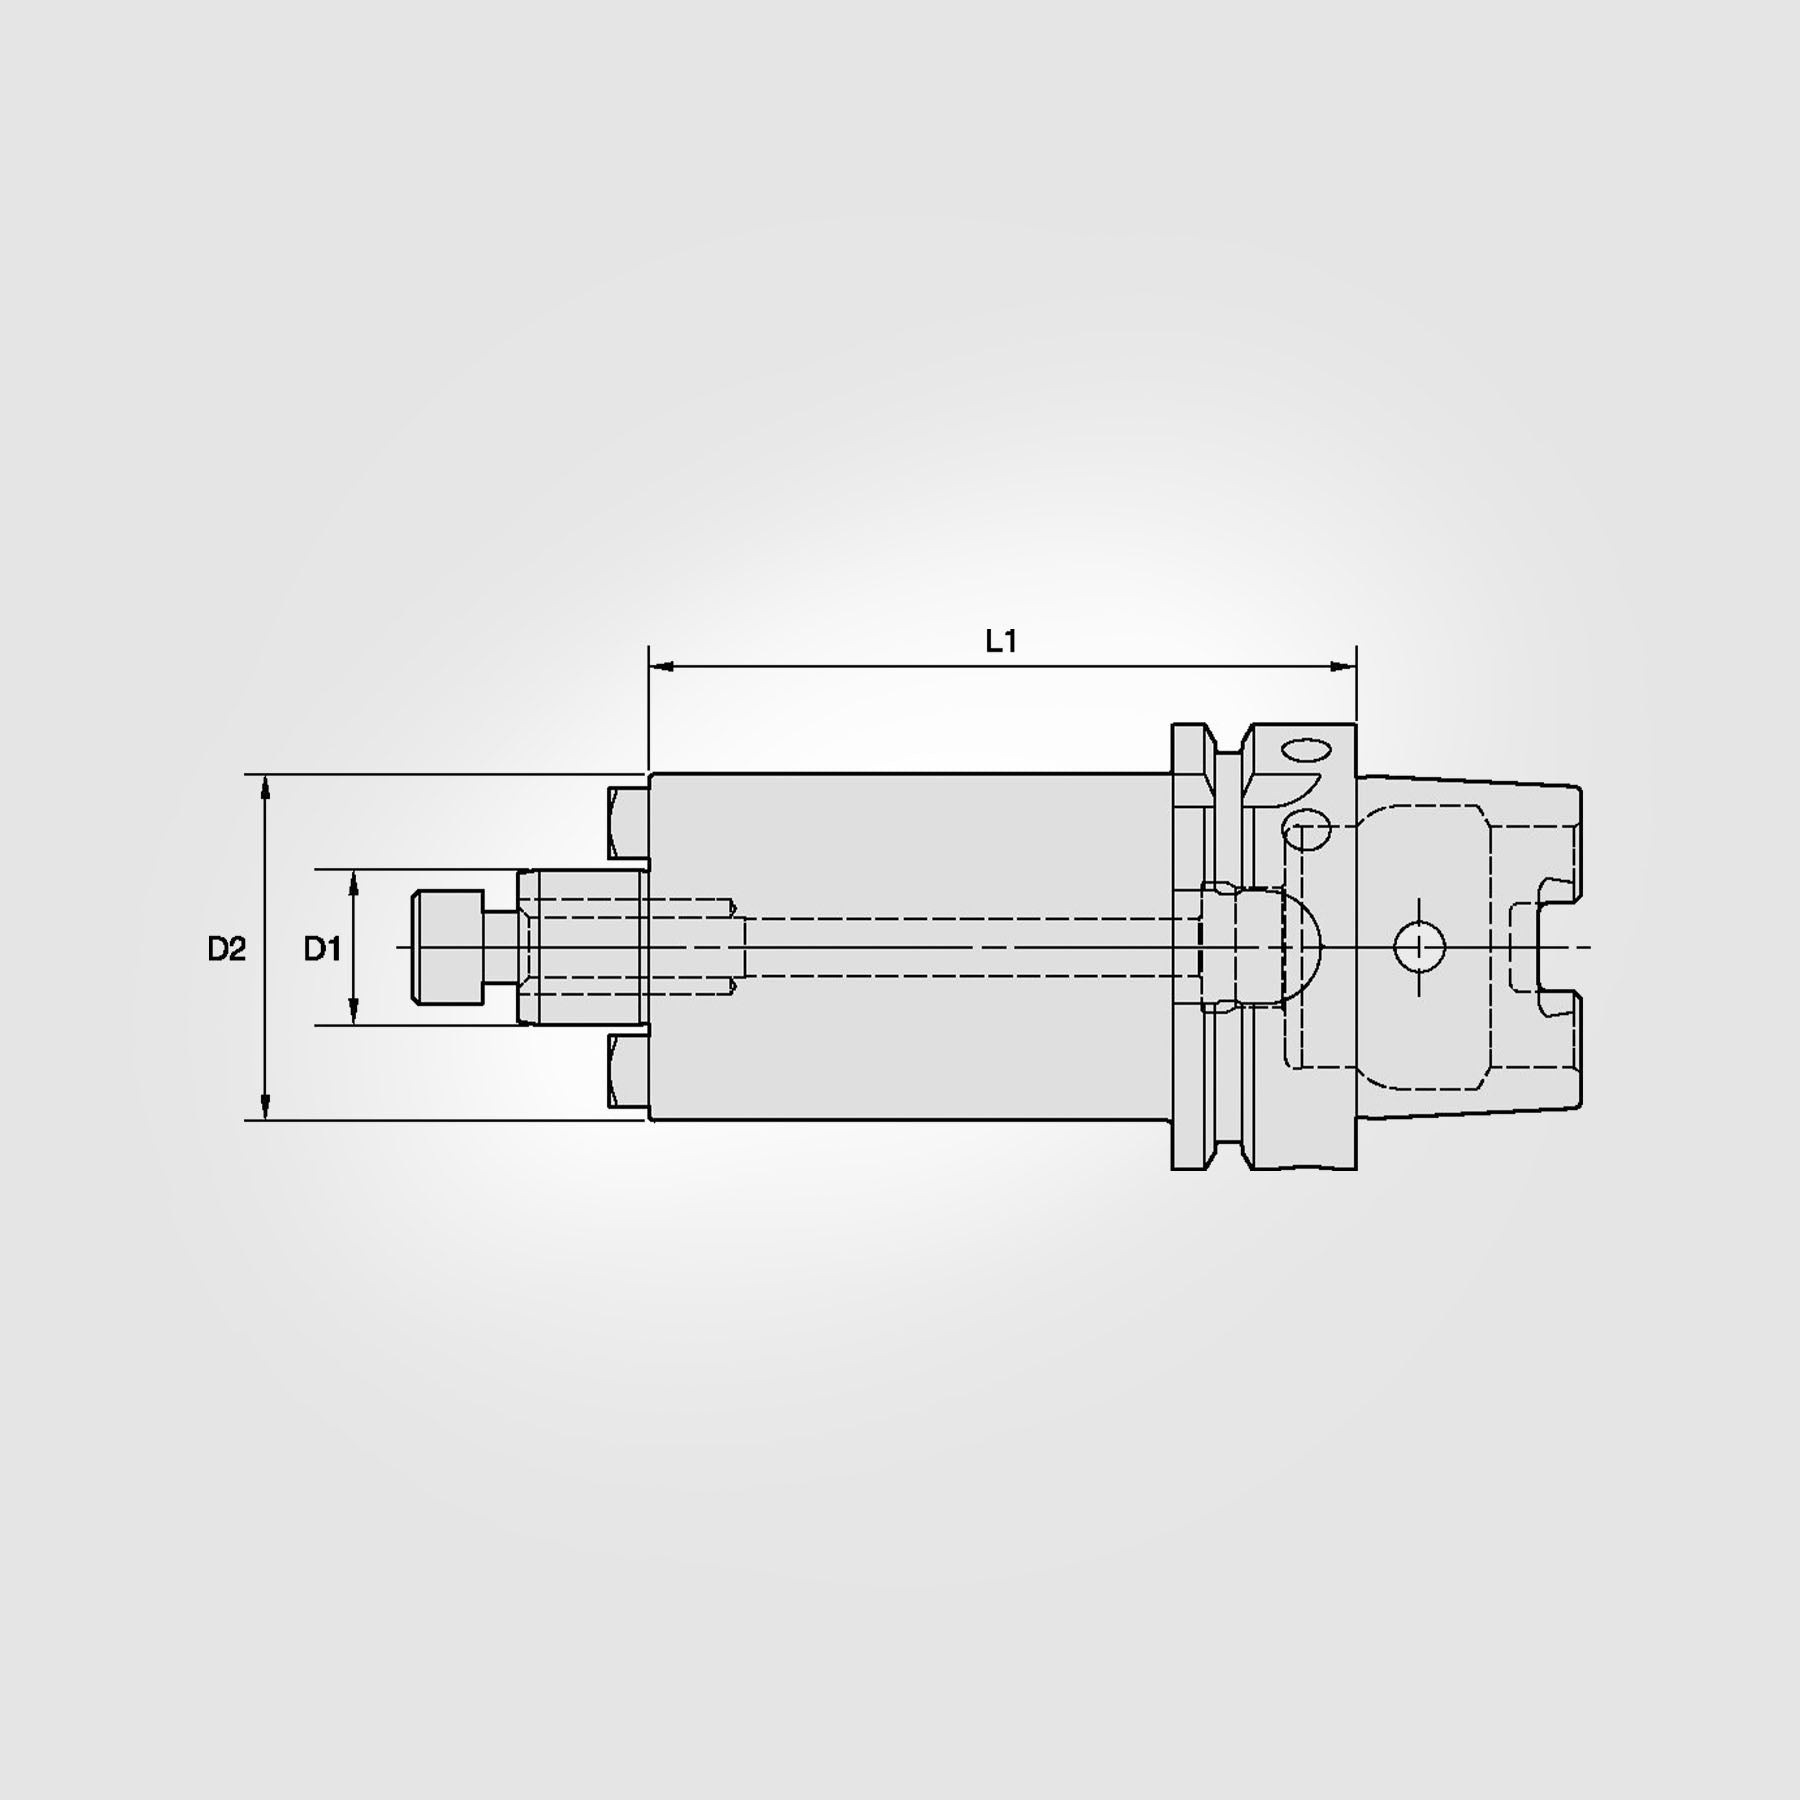 HSK100A Taper Shank 16mm Shell Mill Adapter (THROUGH COOLANT) | 3872498